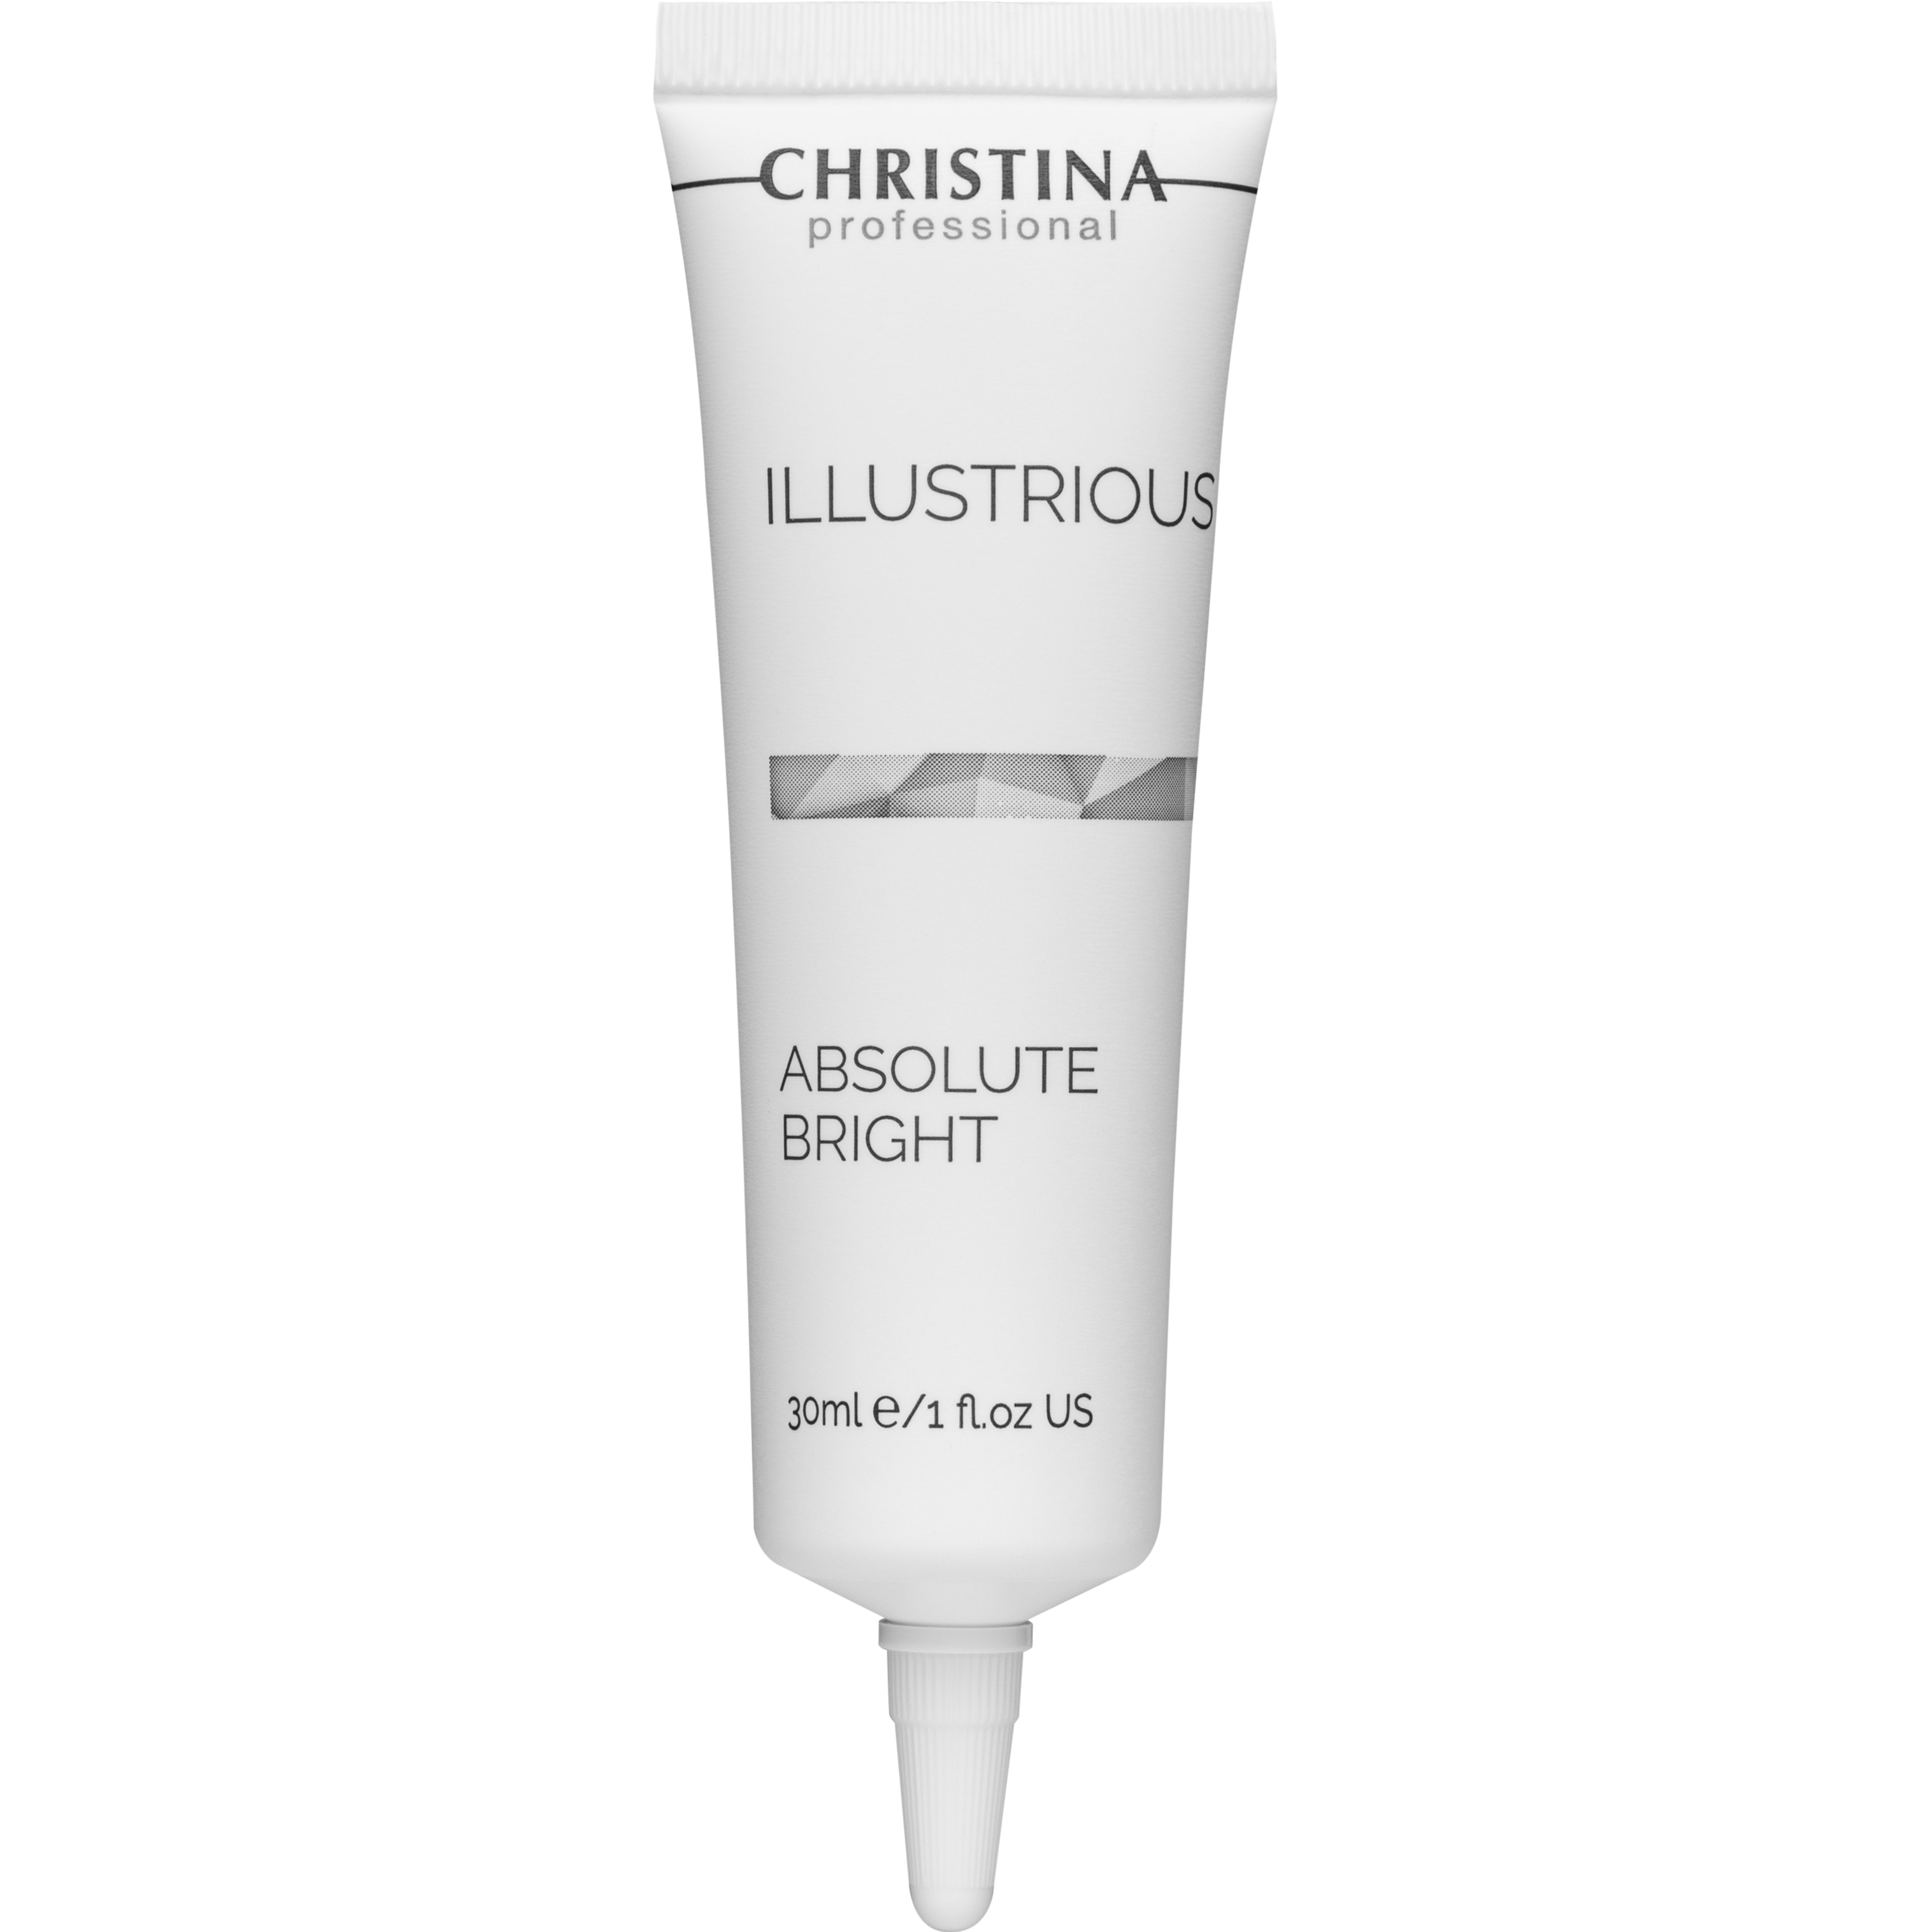 Сыворотка для лица осветляющая Christina Illustrious Absolute Bright 30 мл - фото 1